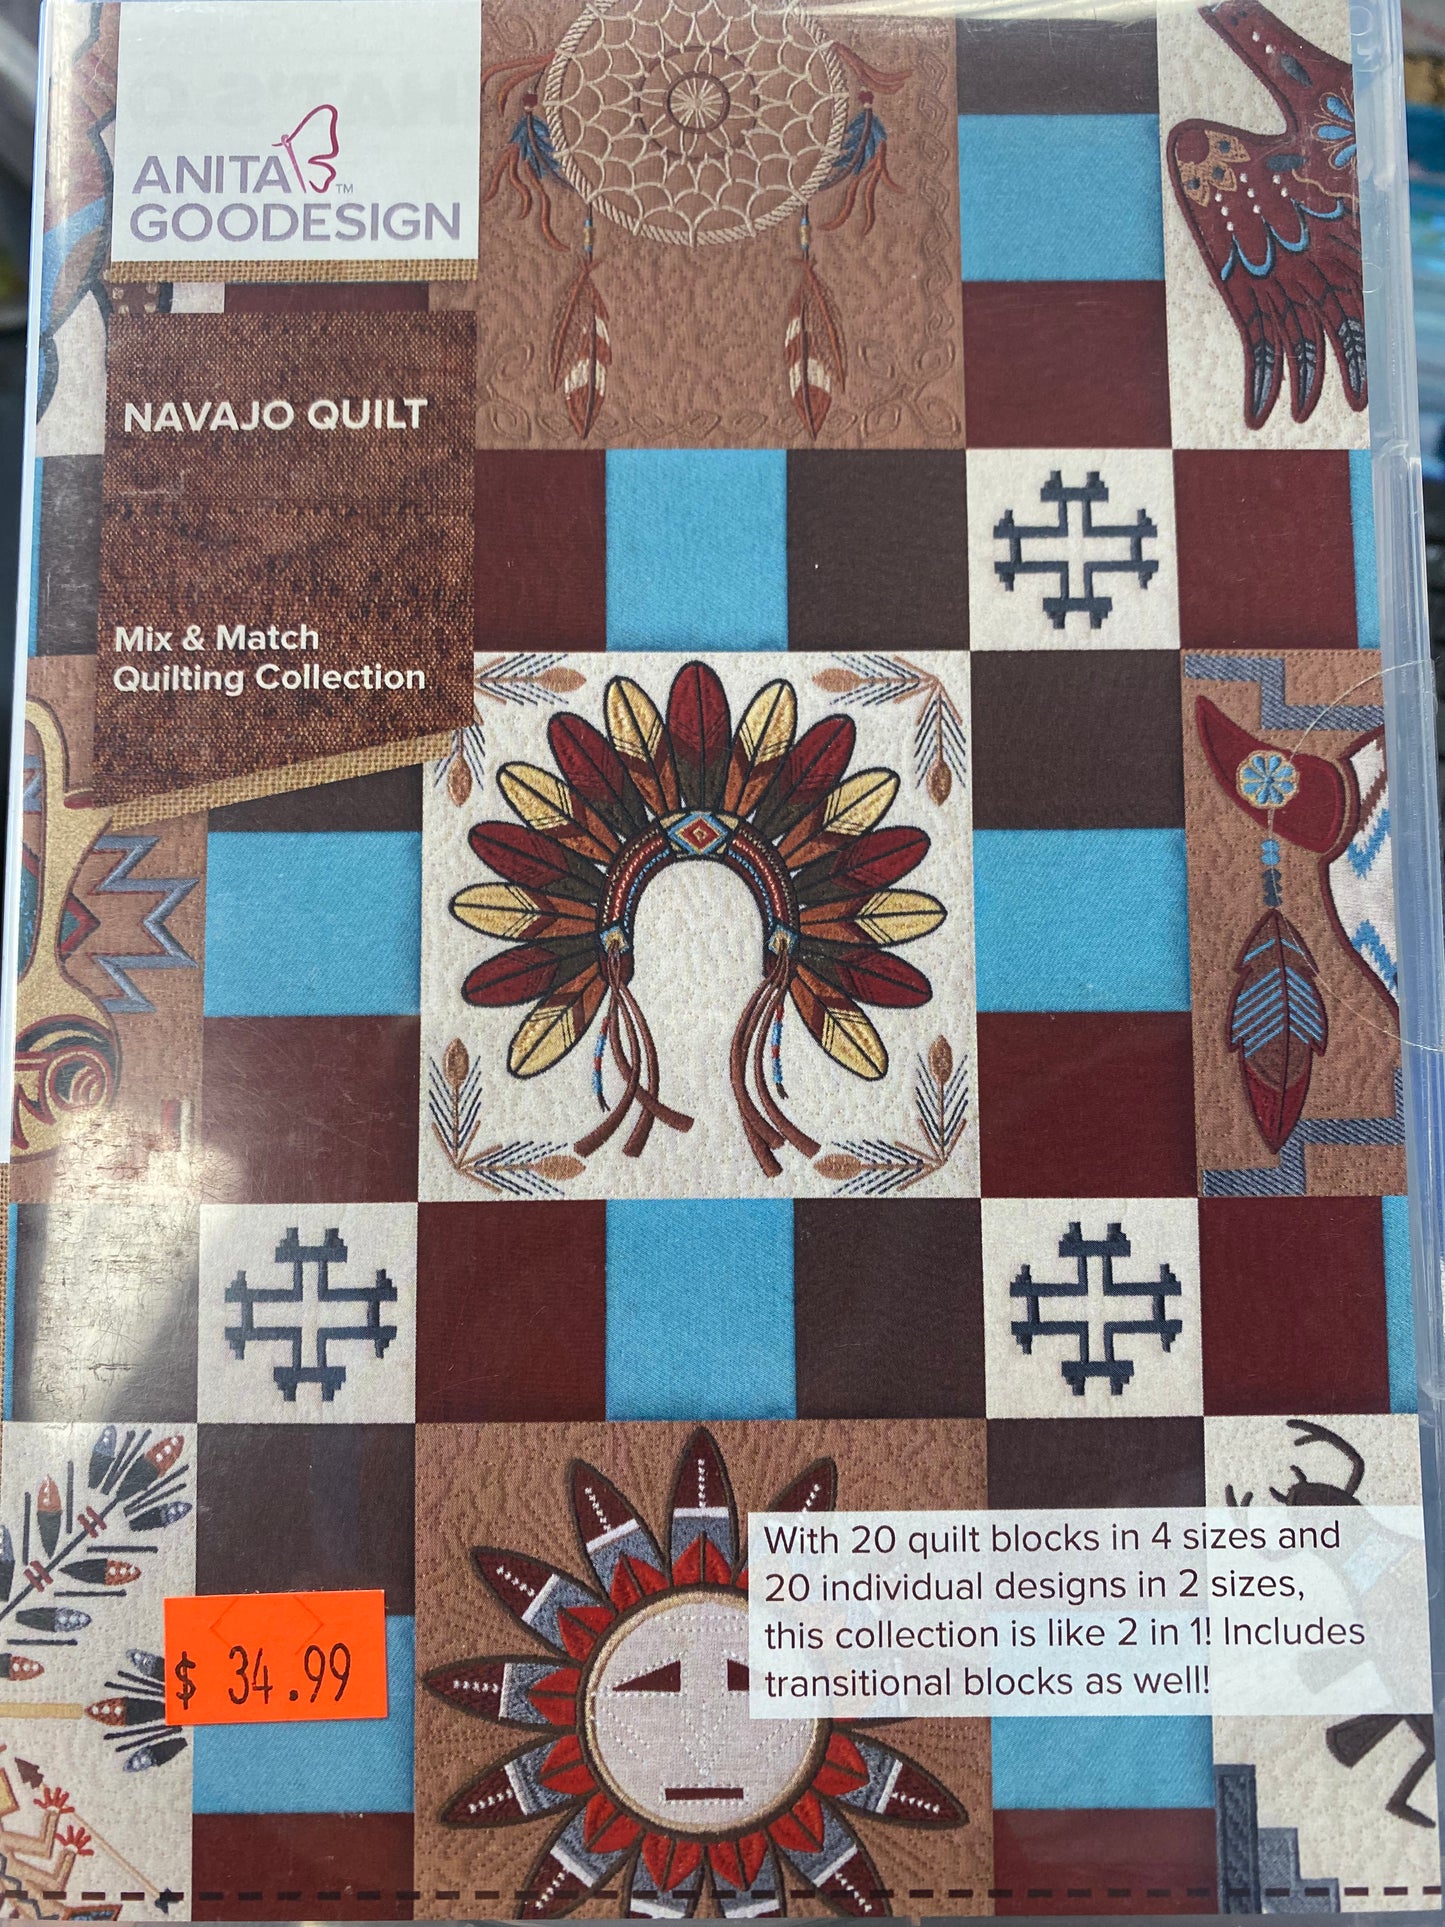 Navajo Quilt by Anita Goodesign